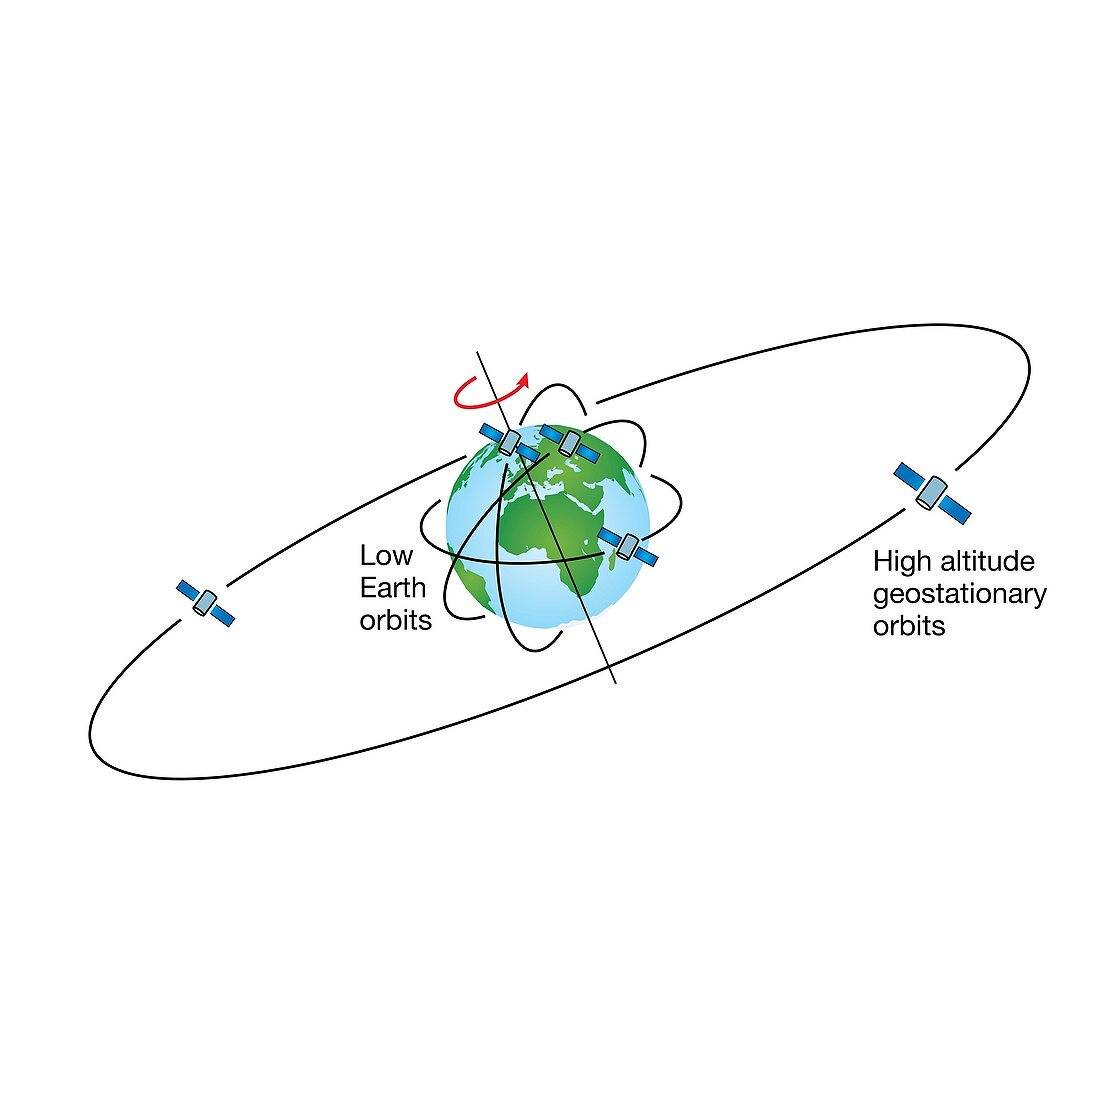 Low Earth orbits and geostationary orbit, illustration